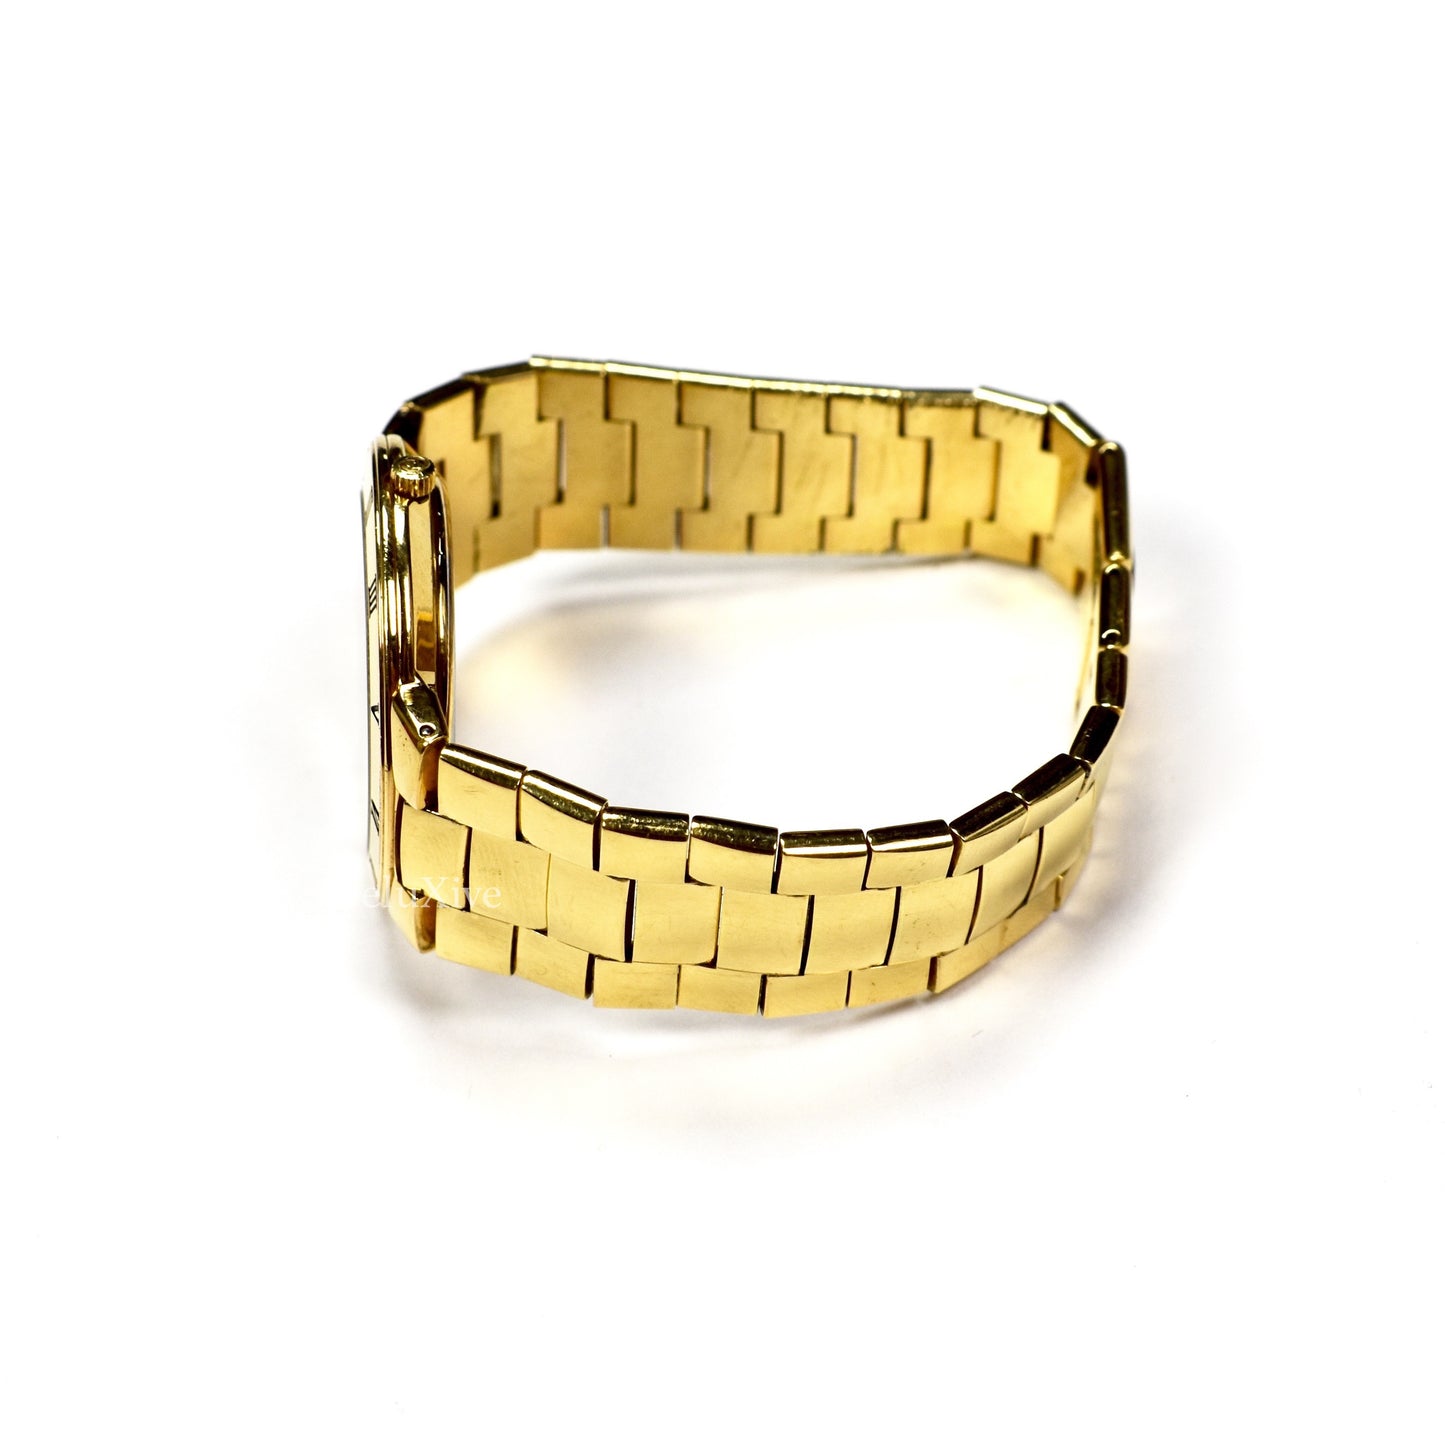 Gucci - 3300M Gold / Champagne Watch